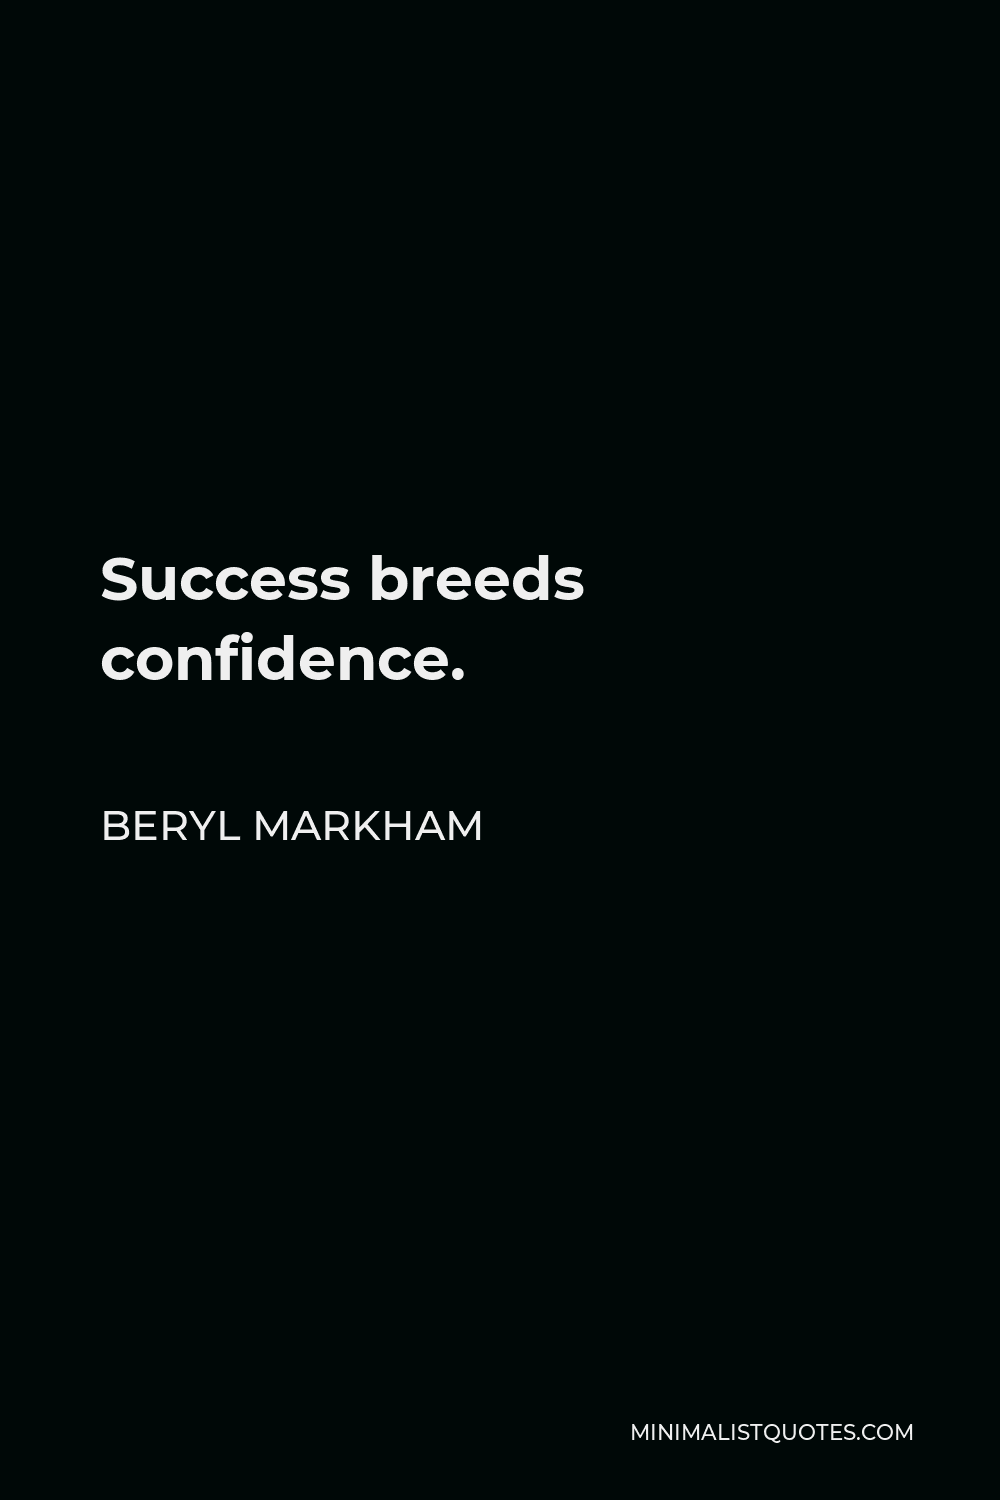 Beryl Markham Quote - Success breeds confidence.